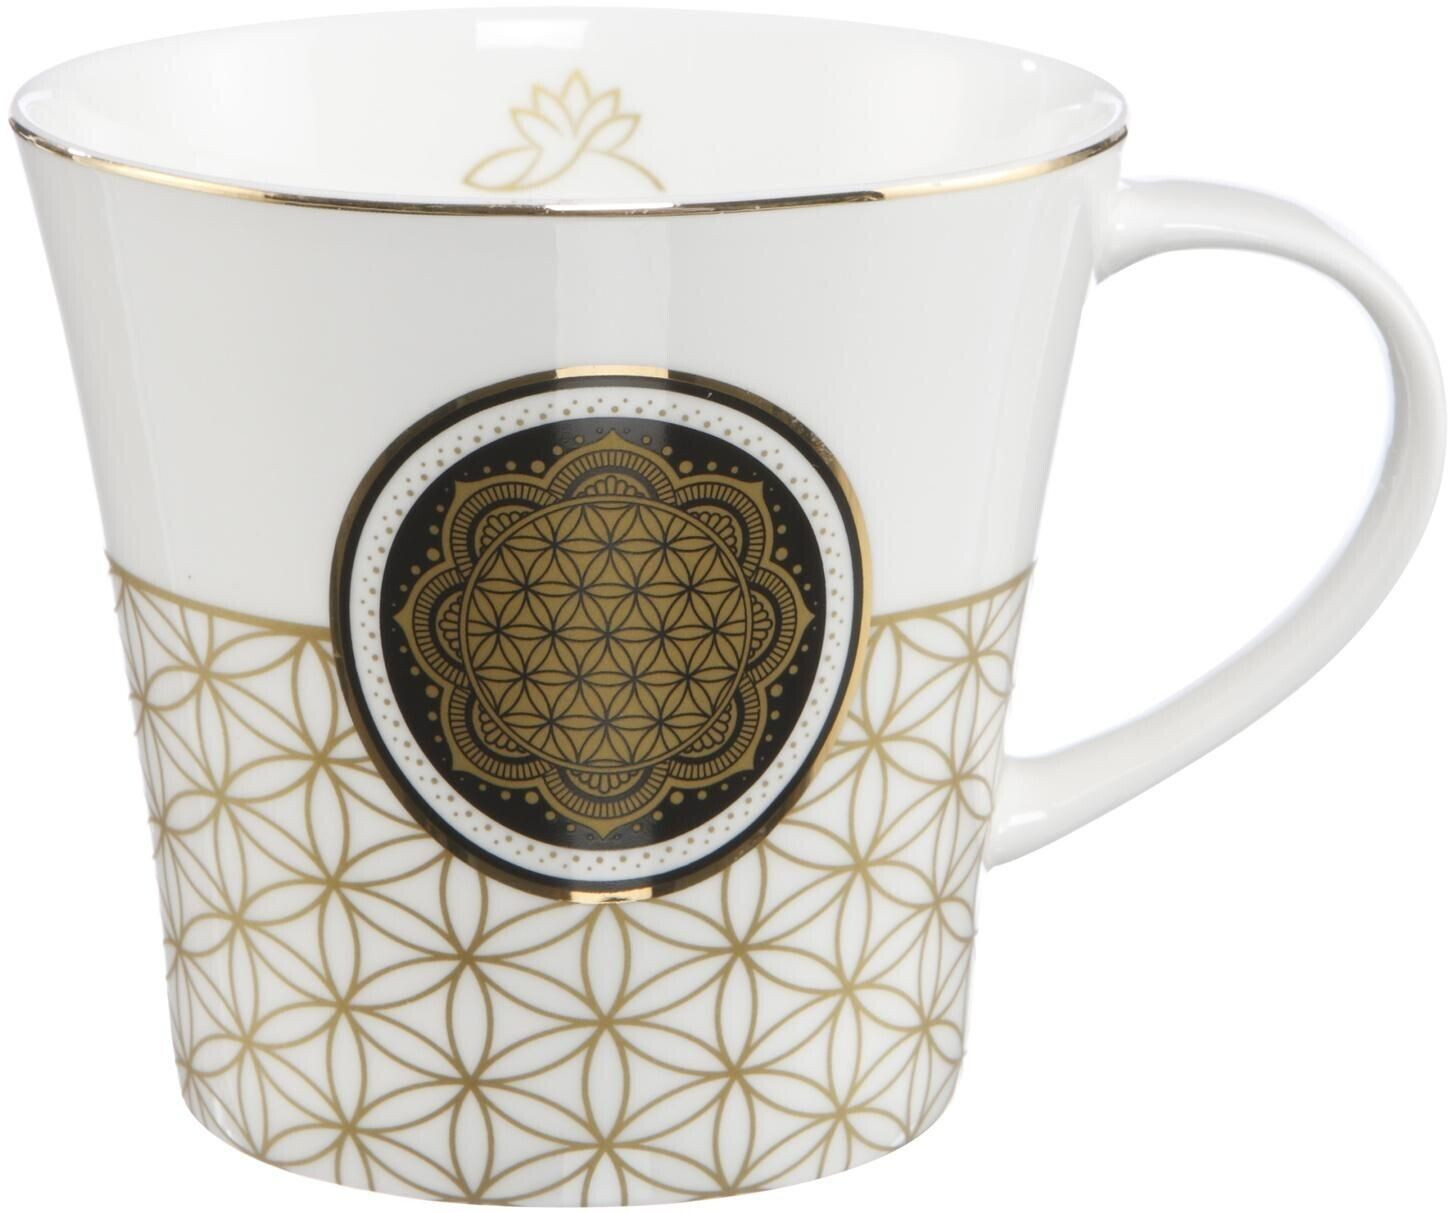 Goebel-Kunststoffe Coffee-/Tea Mug Blume des Lebens weiß 9,5 cm ab 14,95 €  | Preisvergleich bei